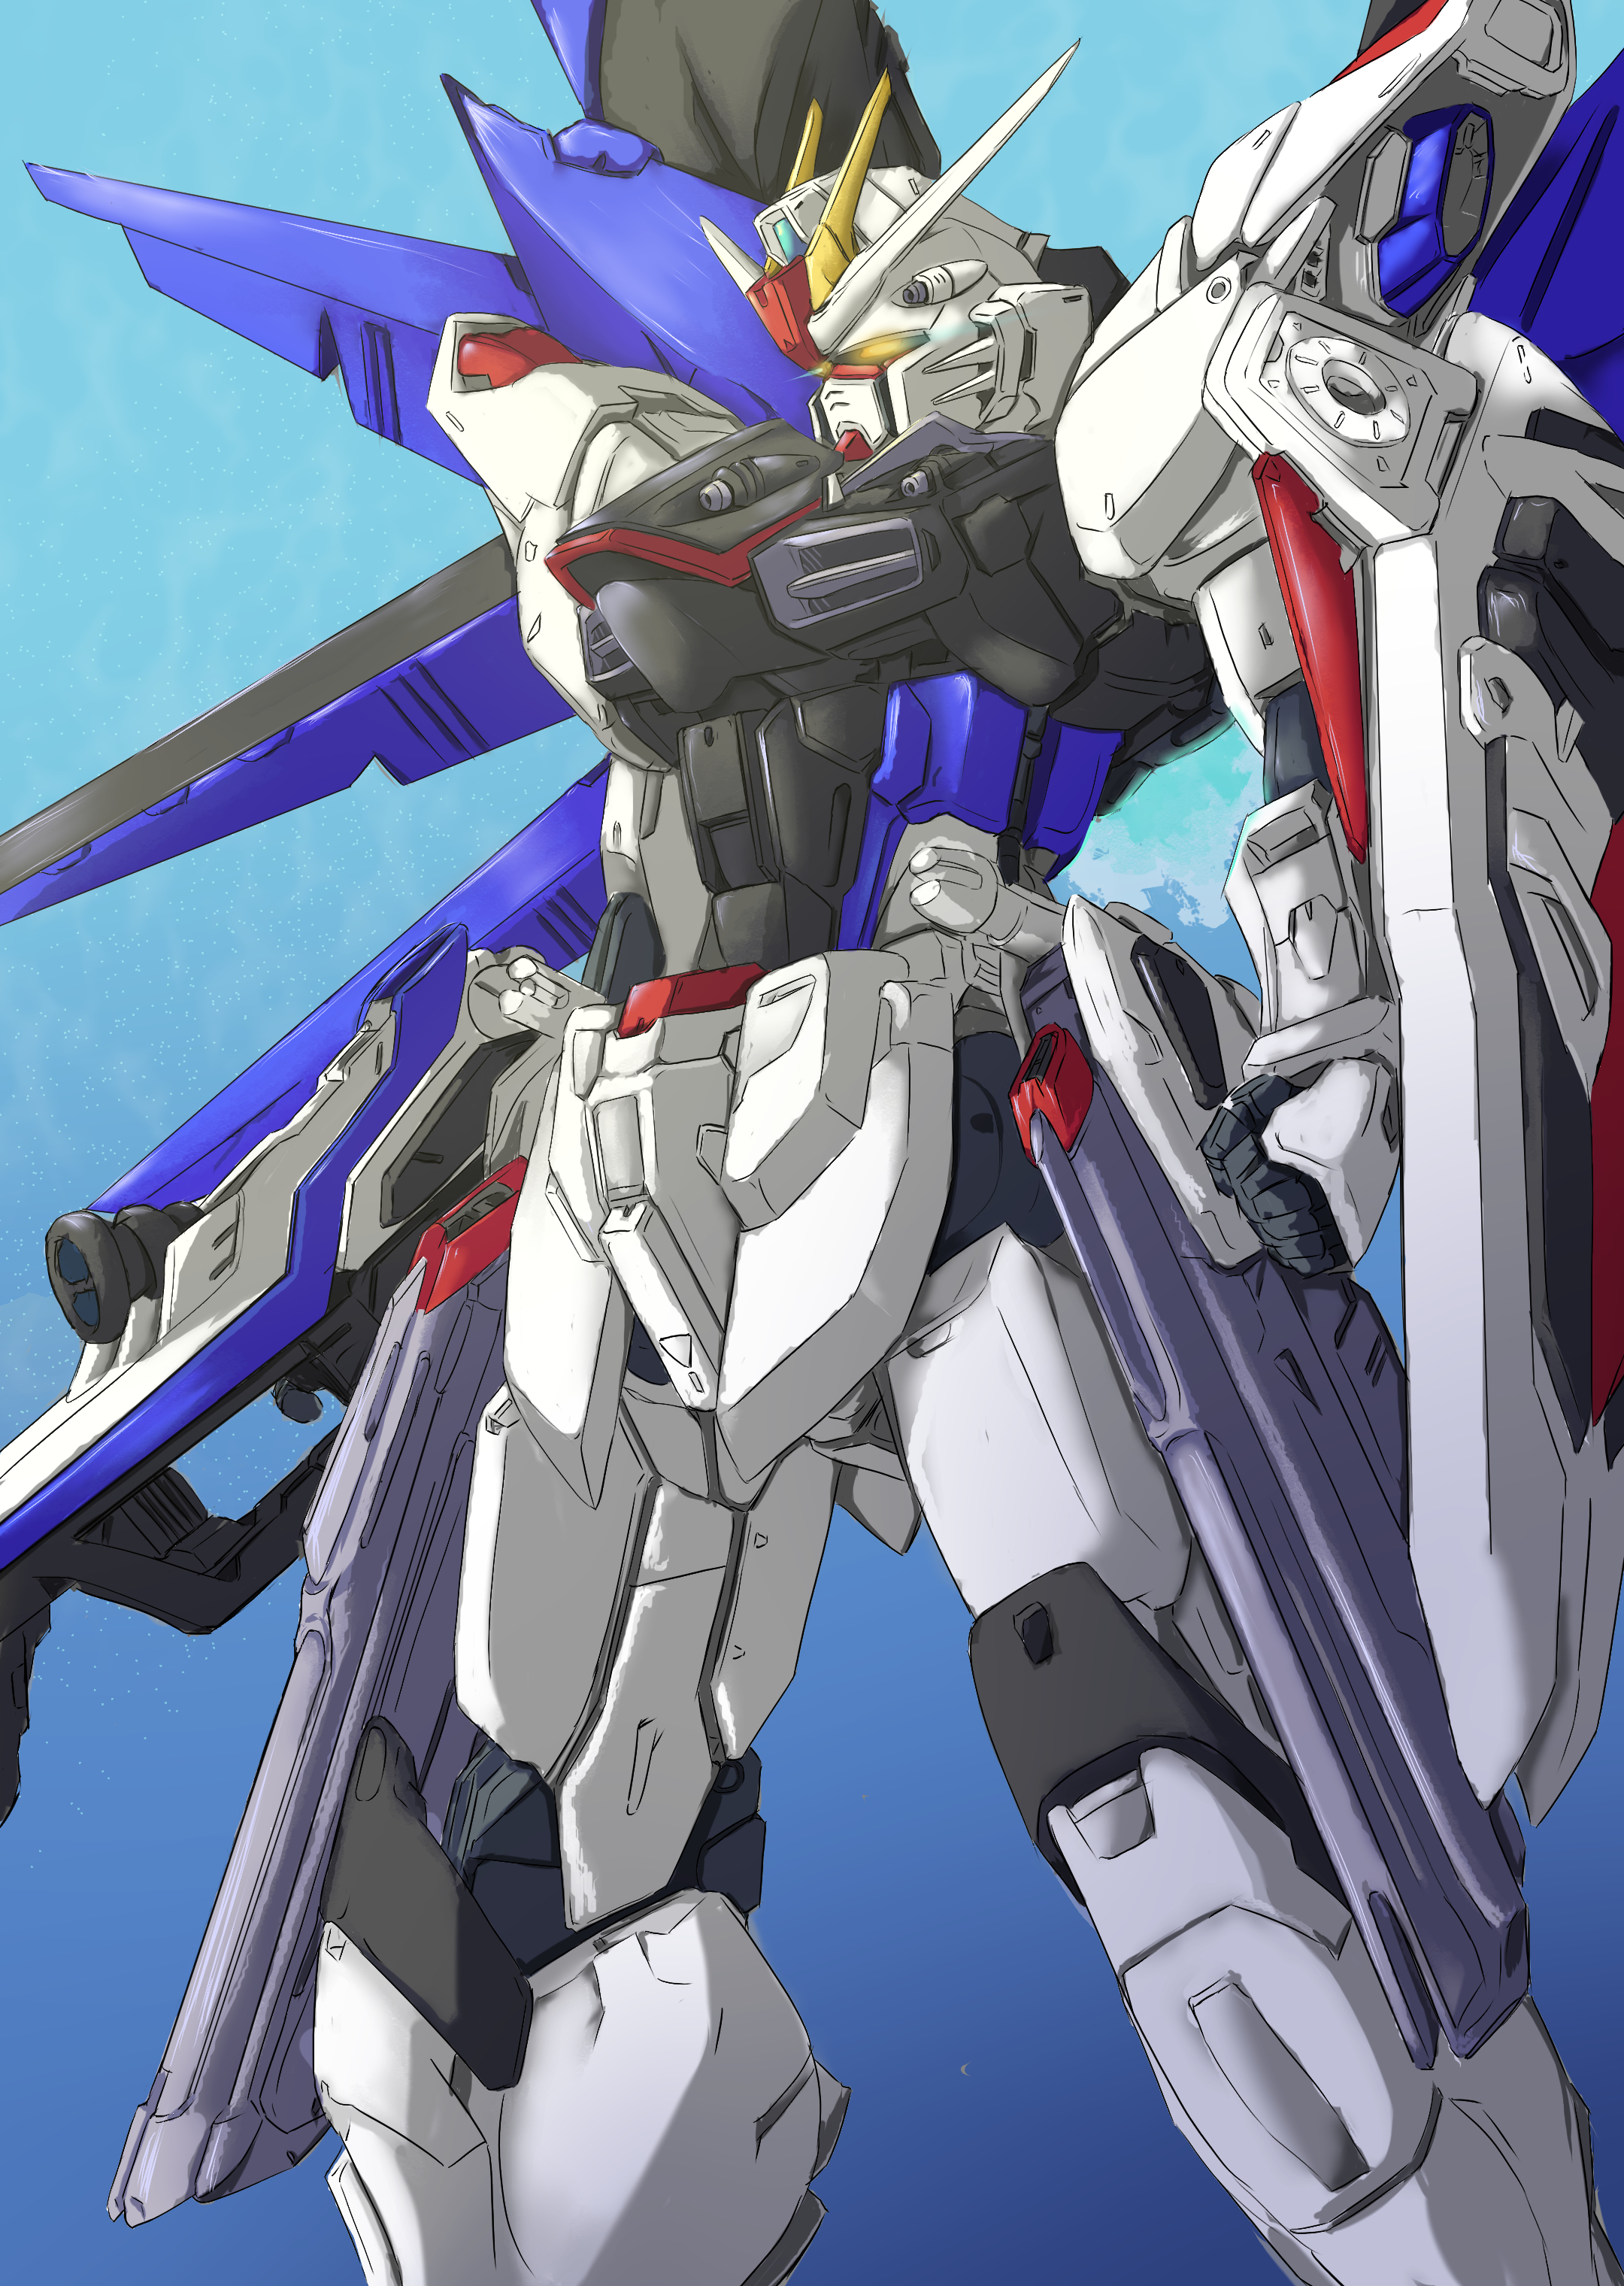 Anime 2160x3040 anime mechs Super Robot Taisen Gundam Mobile Suit Gundam SEED Freedom Gundam artwork digital art fan art